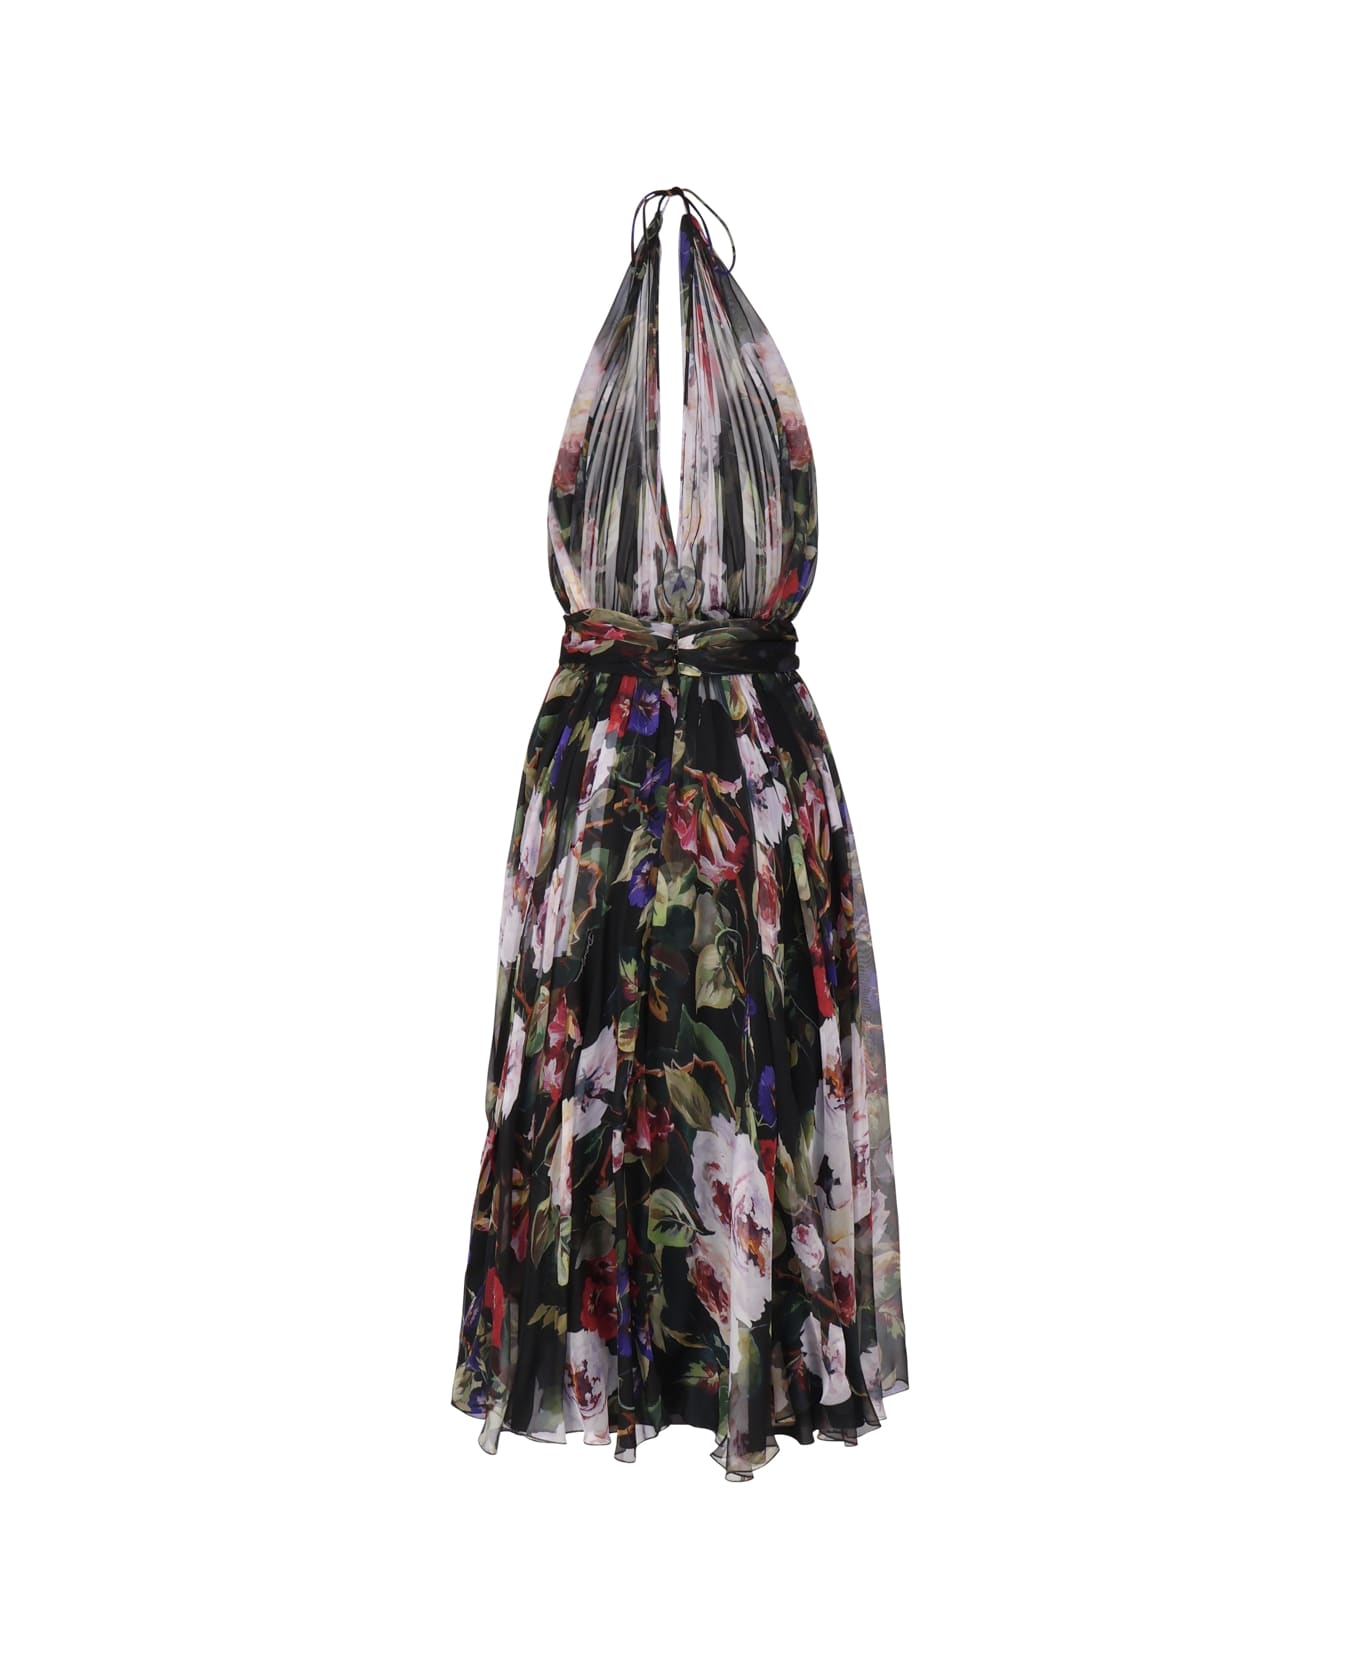 Dolce & Gabbana Rose Garden Print Silk Chiffon Longuette Dress - Multicolor